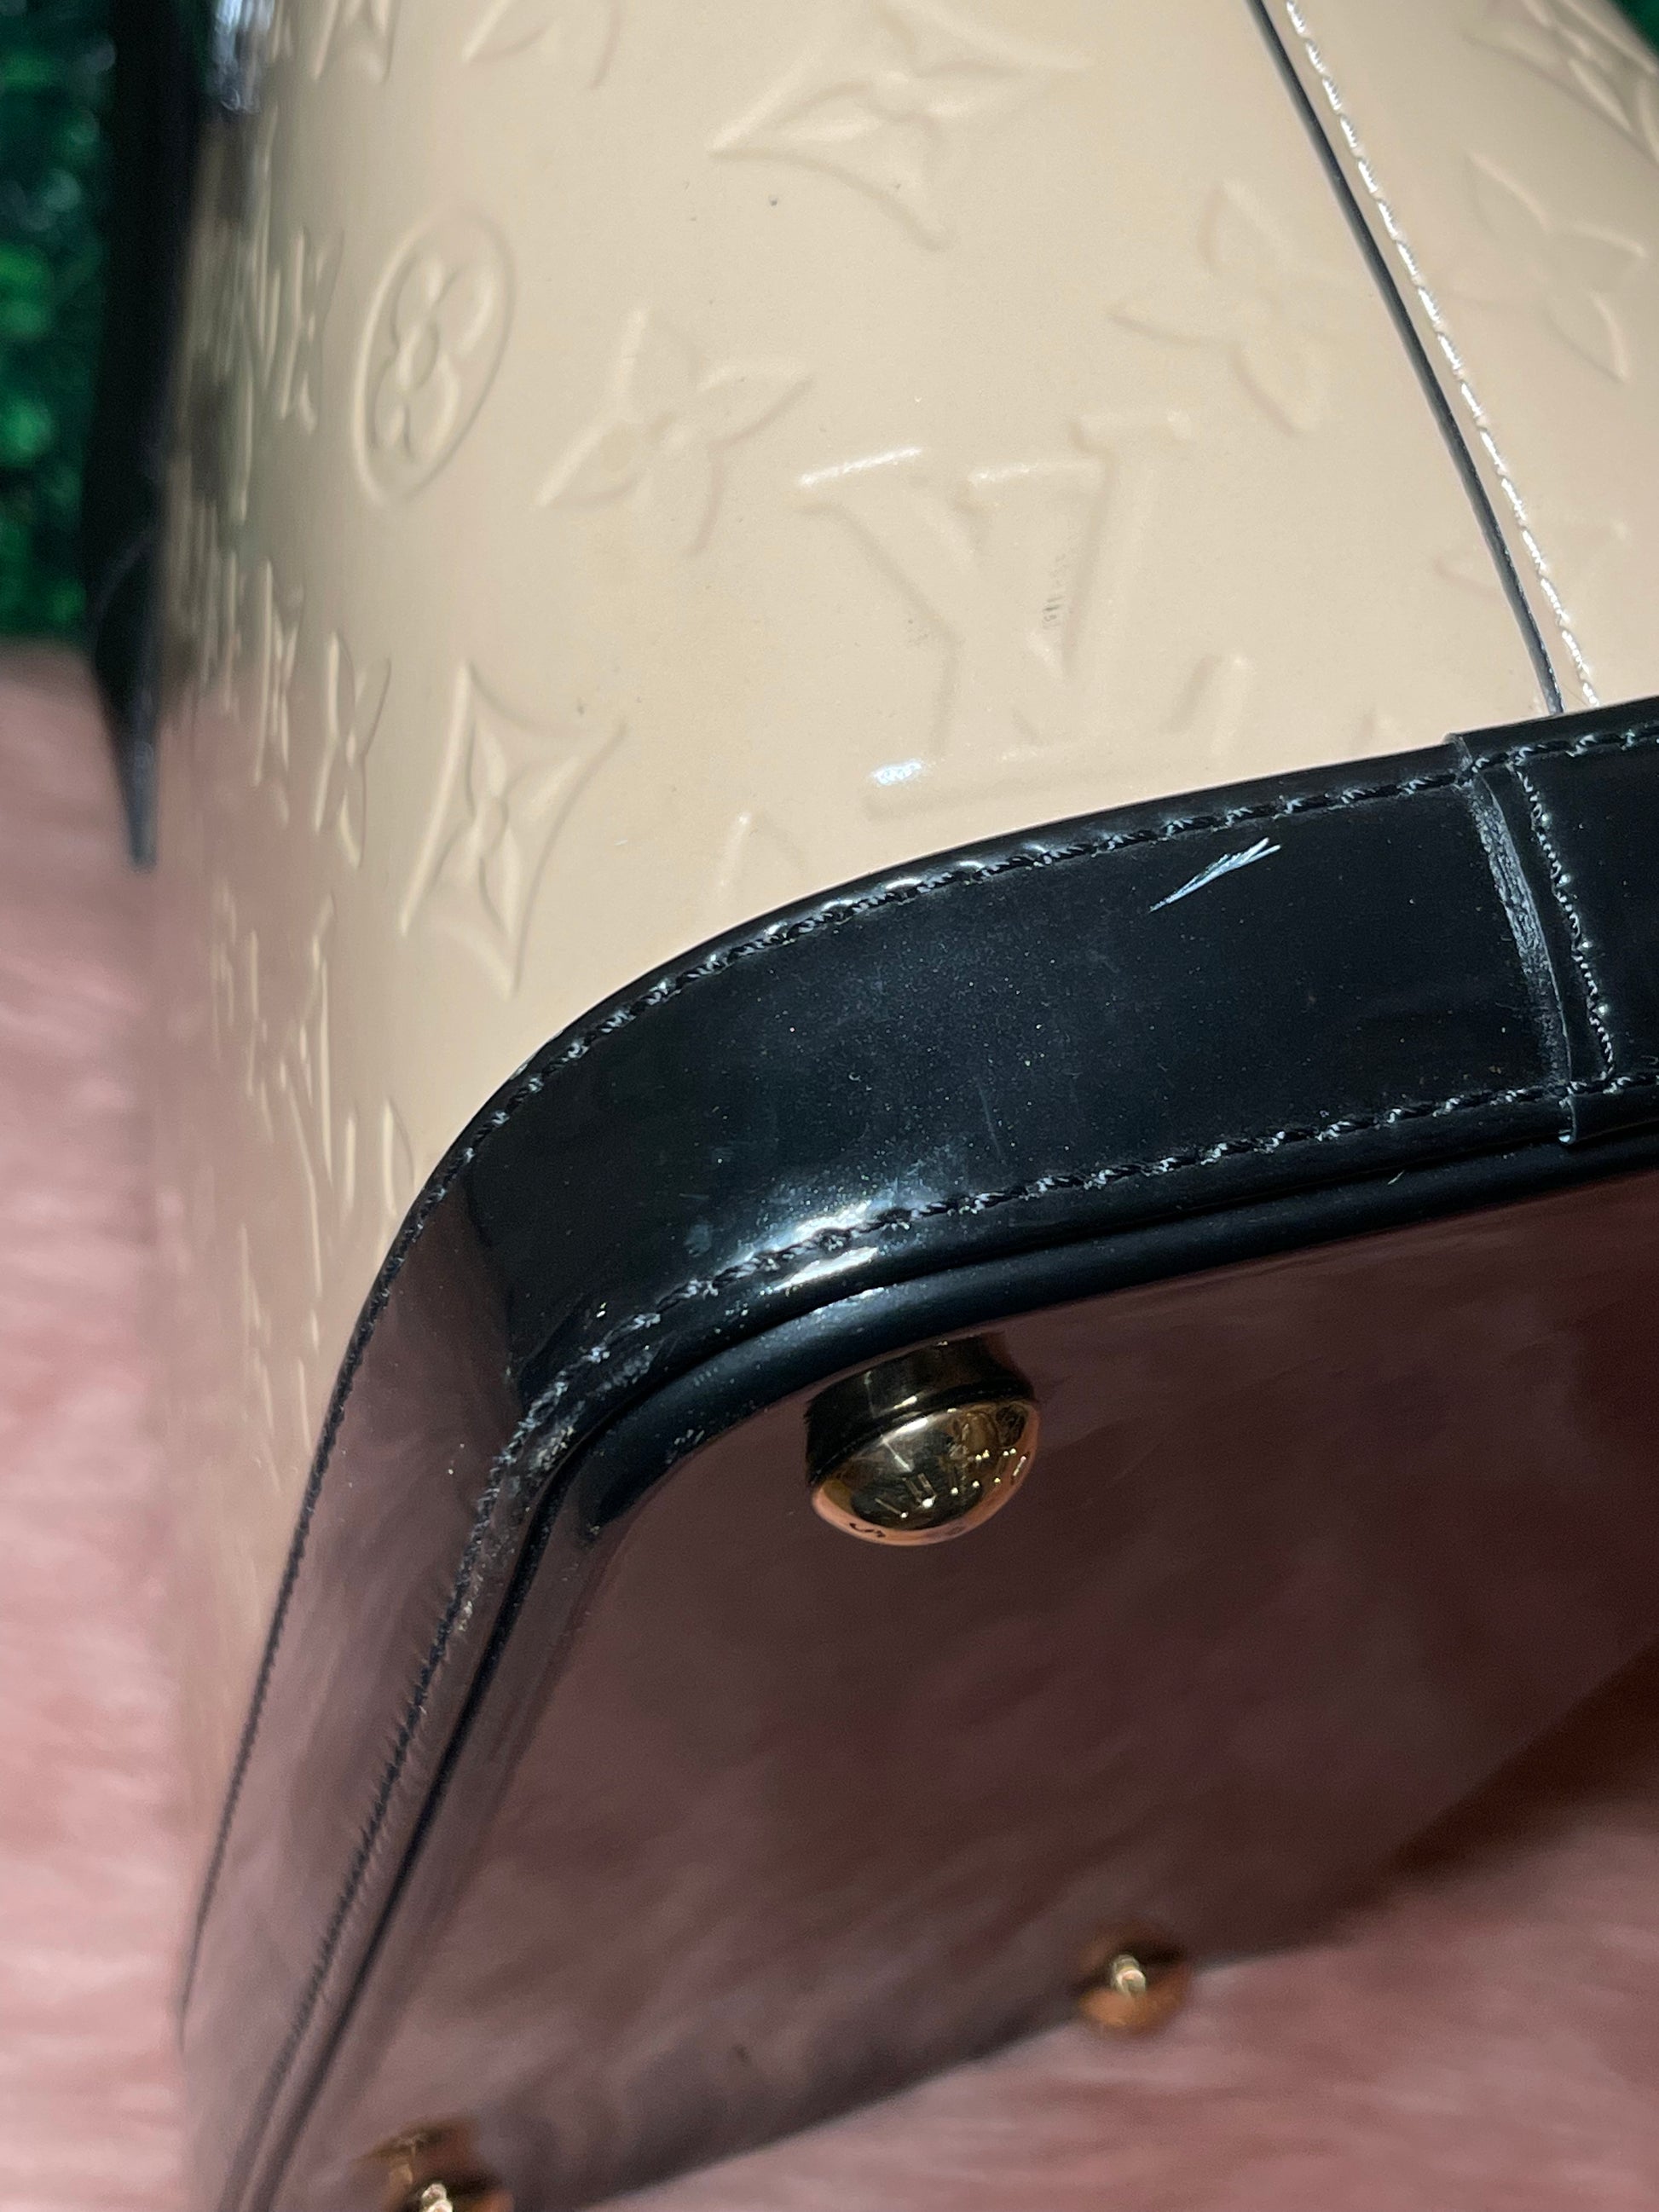 Lockit leather handbag Louis Vuitton Beige in Leather - 30145108